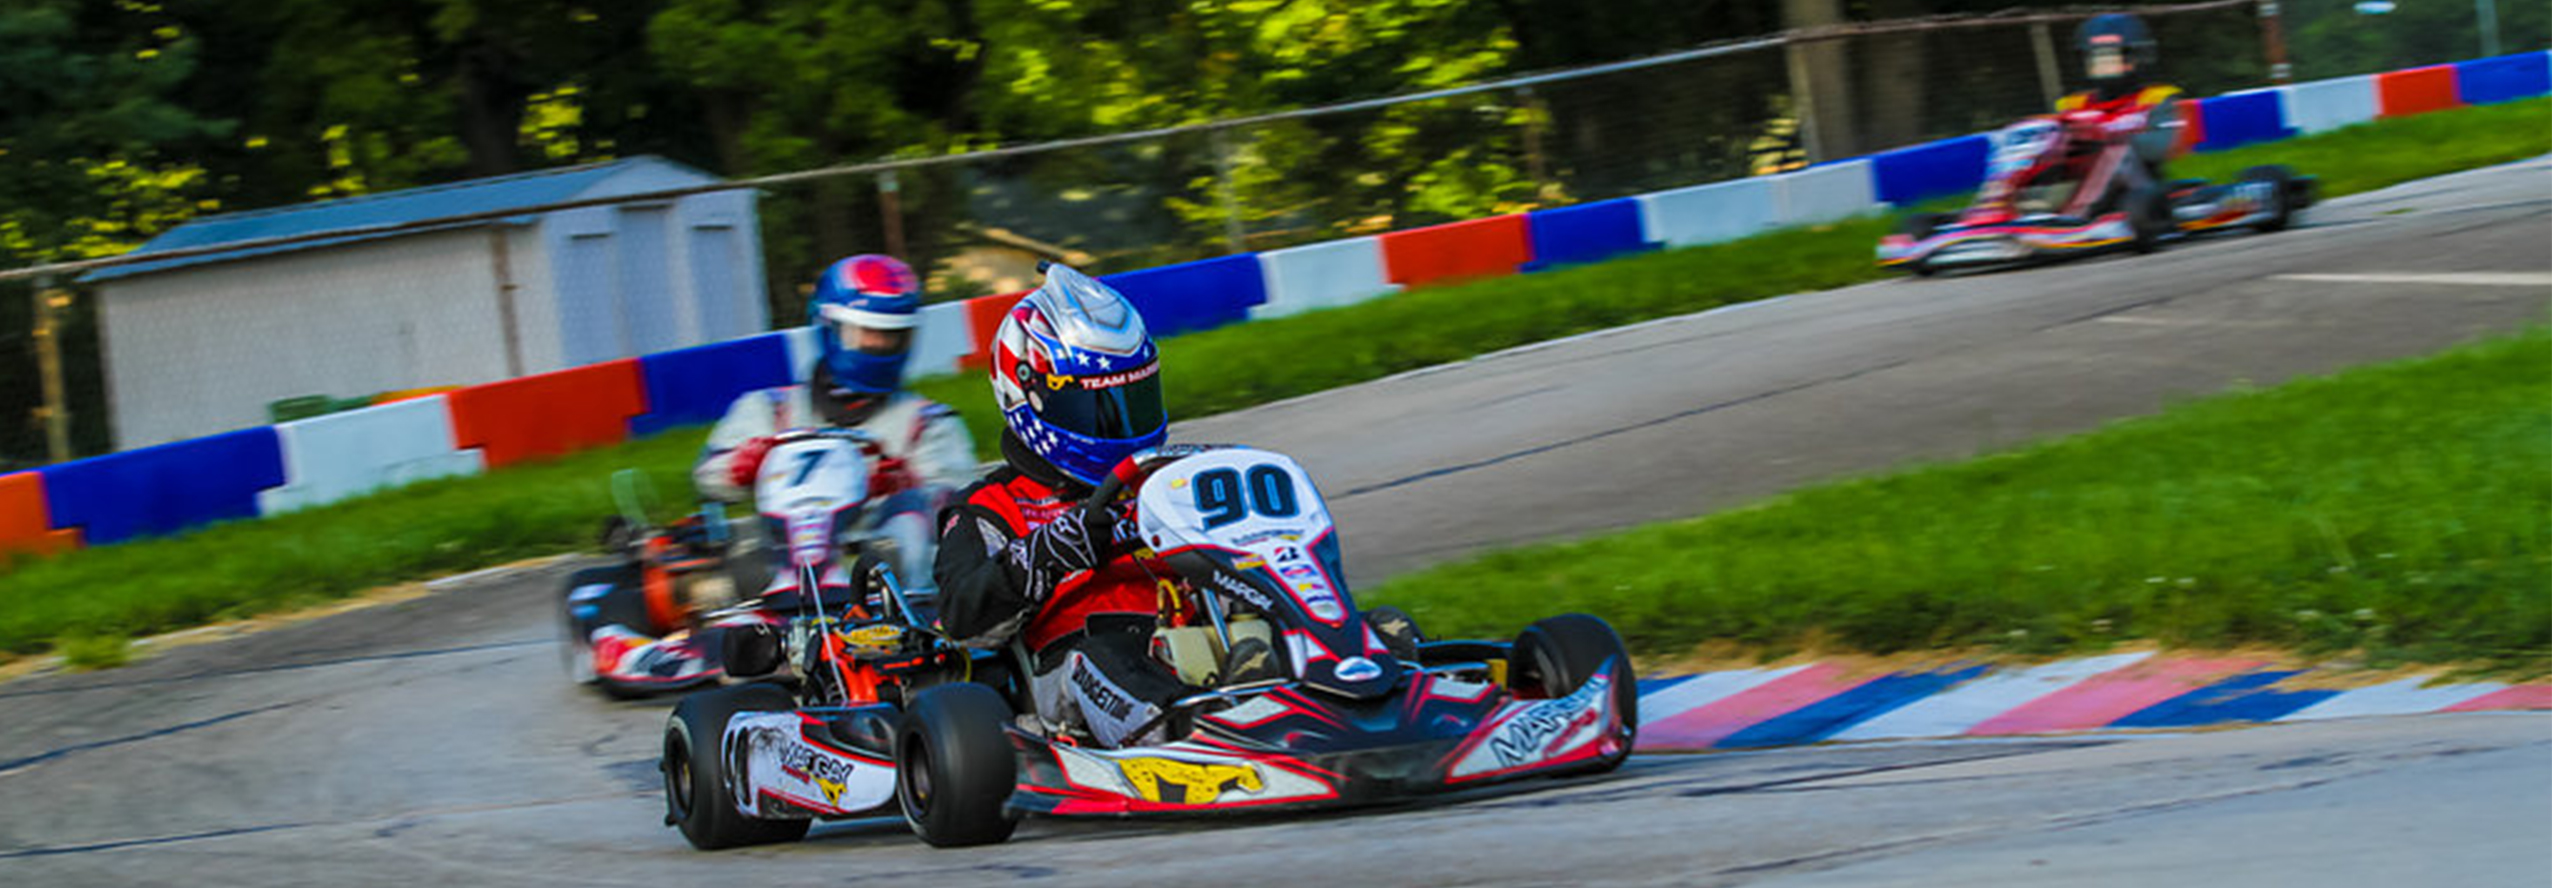 Where We Race, Nashville Go-Kart Racing Club